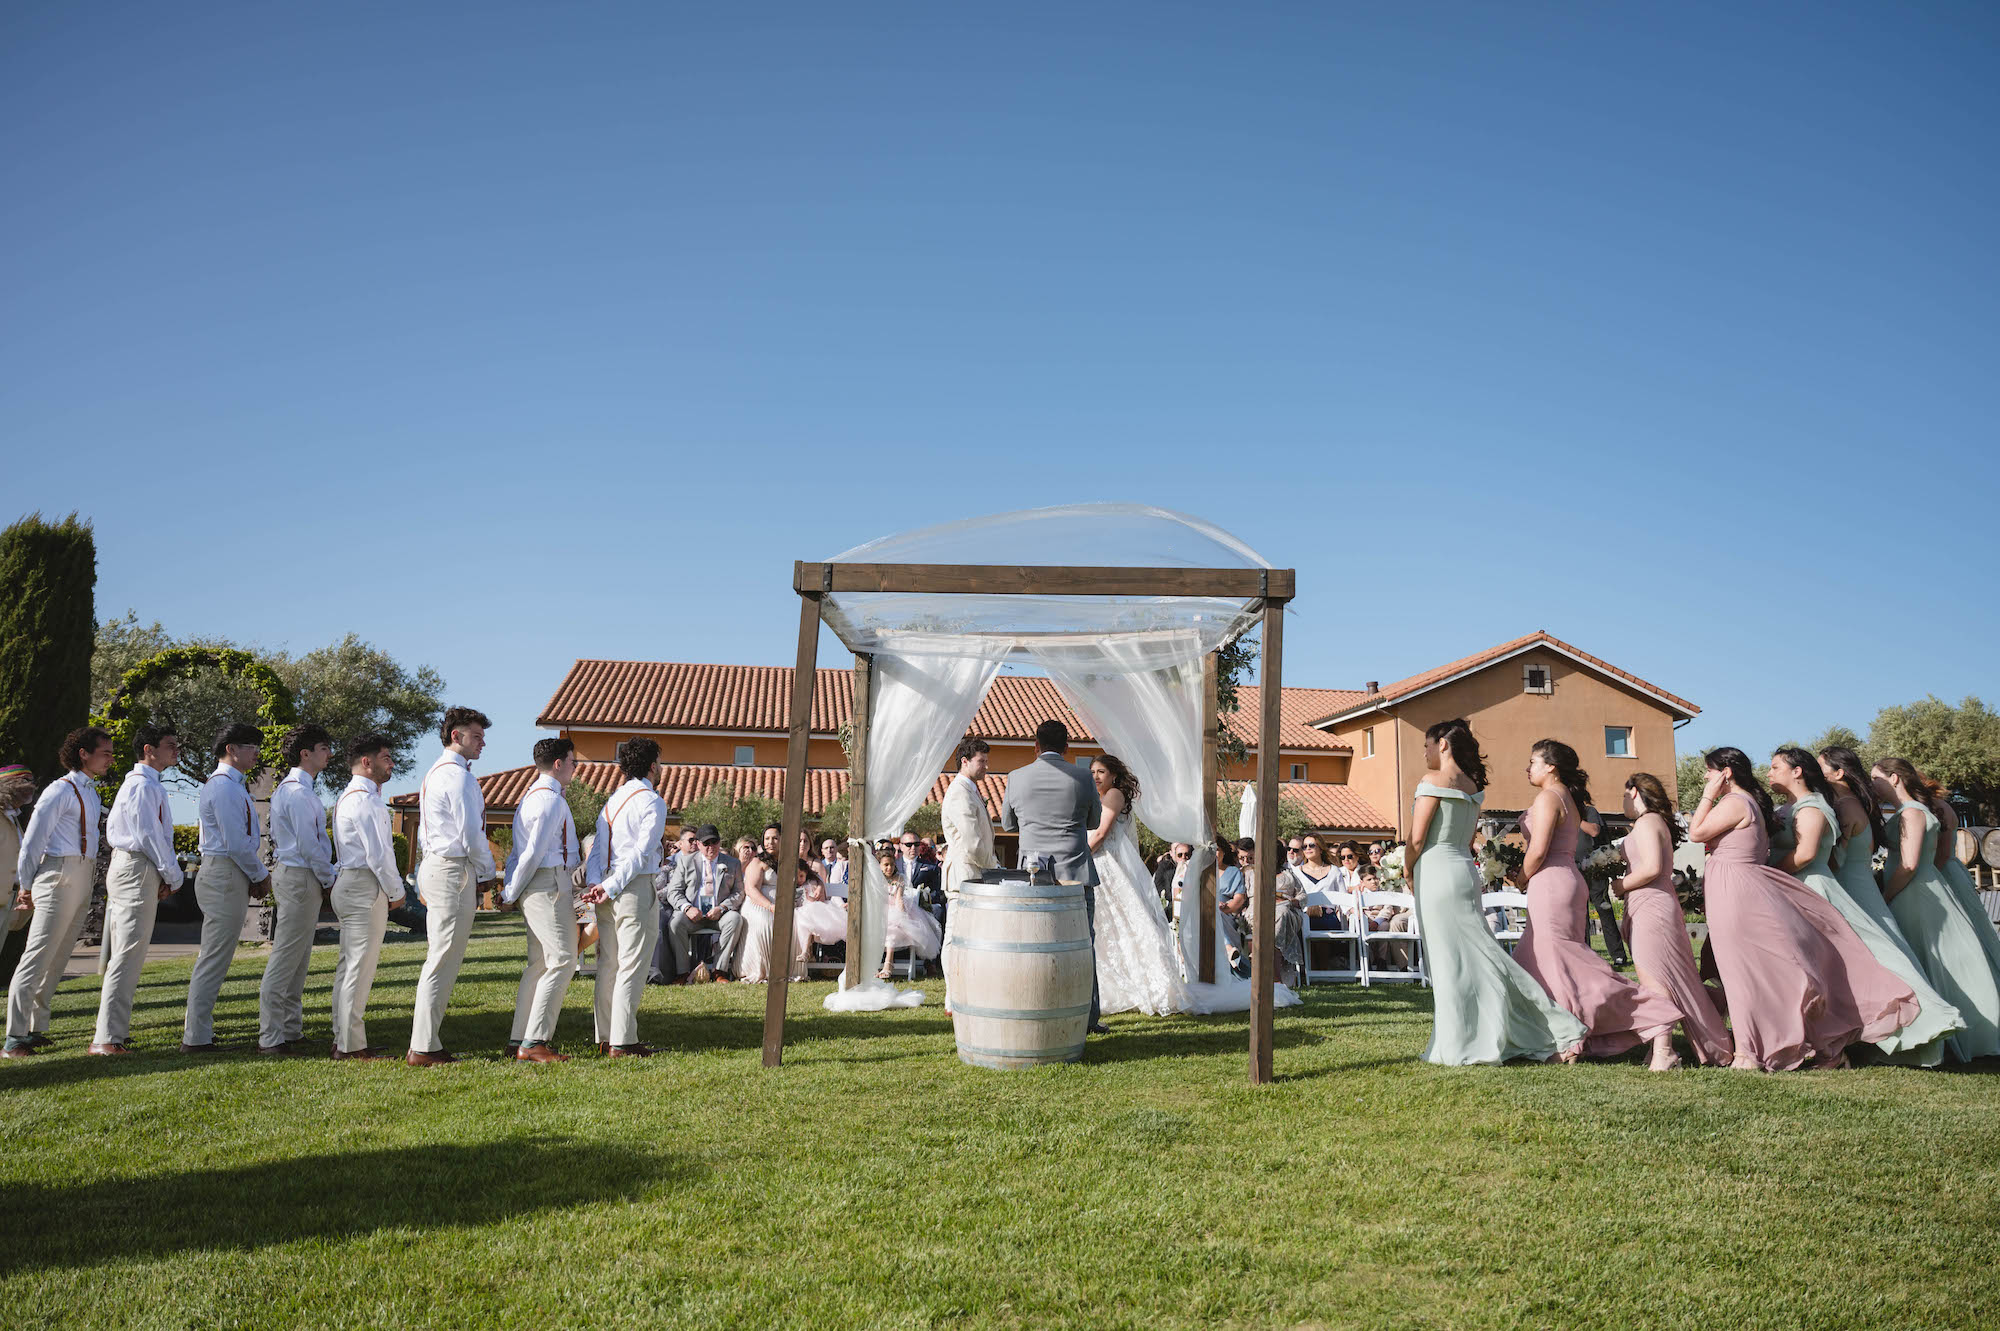 Soft Romantic + Minimalistic Wedding at Viansa Winery in Sonoma Jen Vazquez Photography